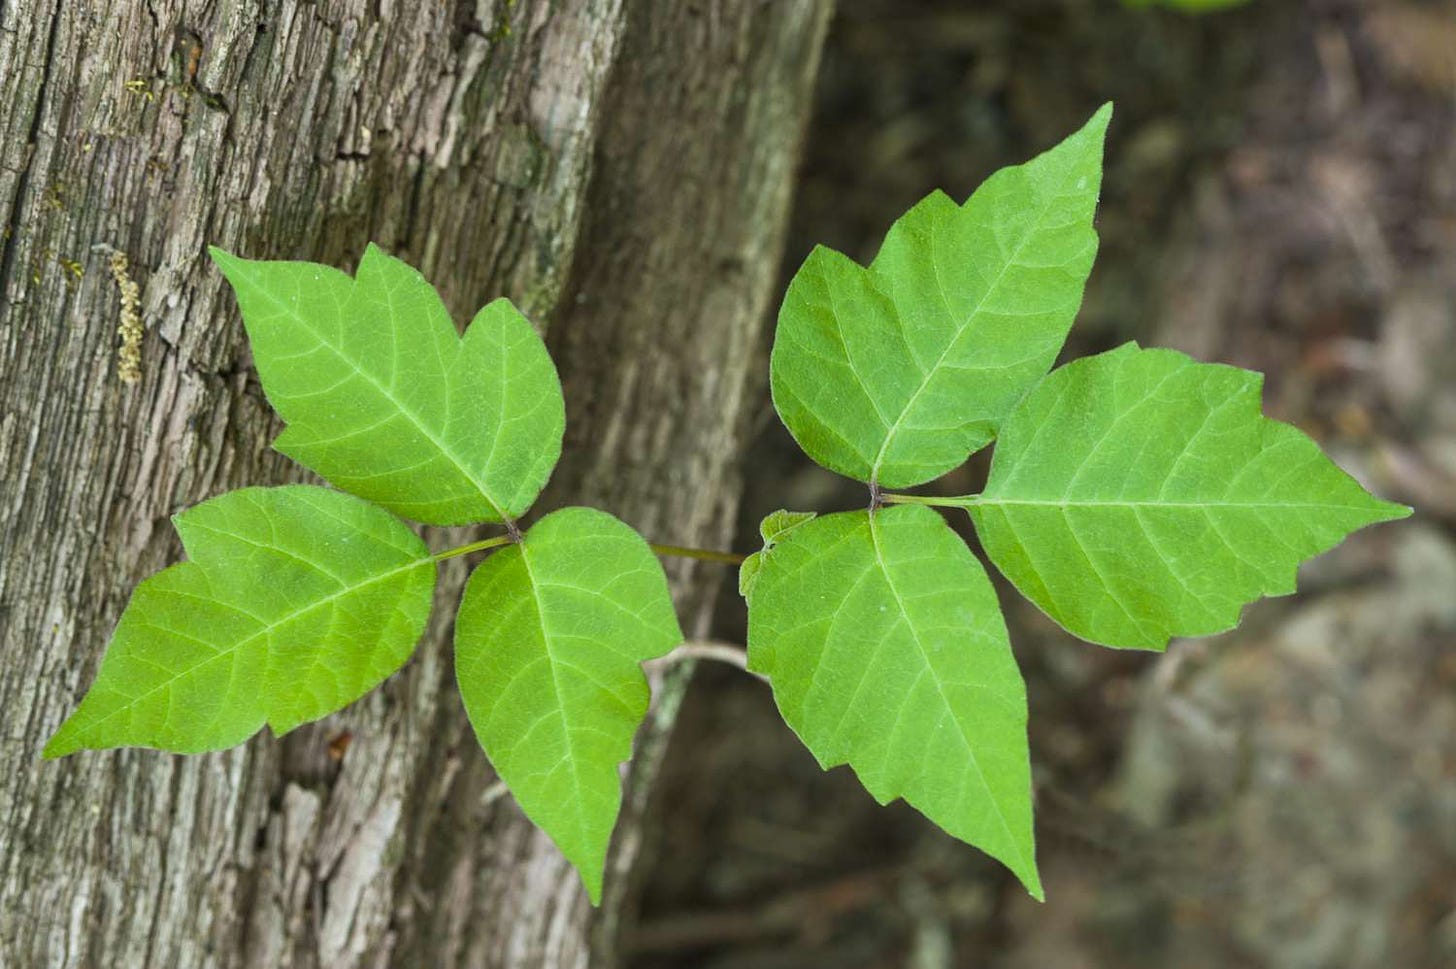 Poison Ivy Rash: How To Identify, Symptoms, Causes